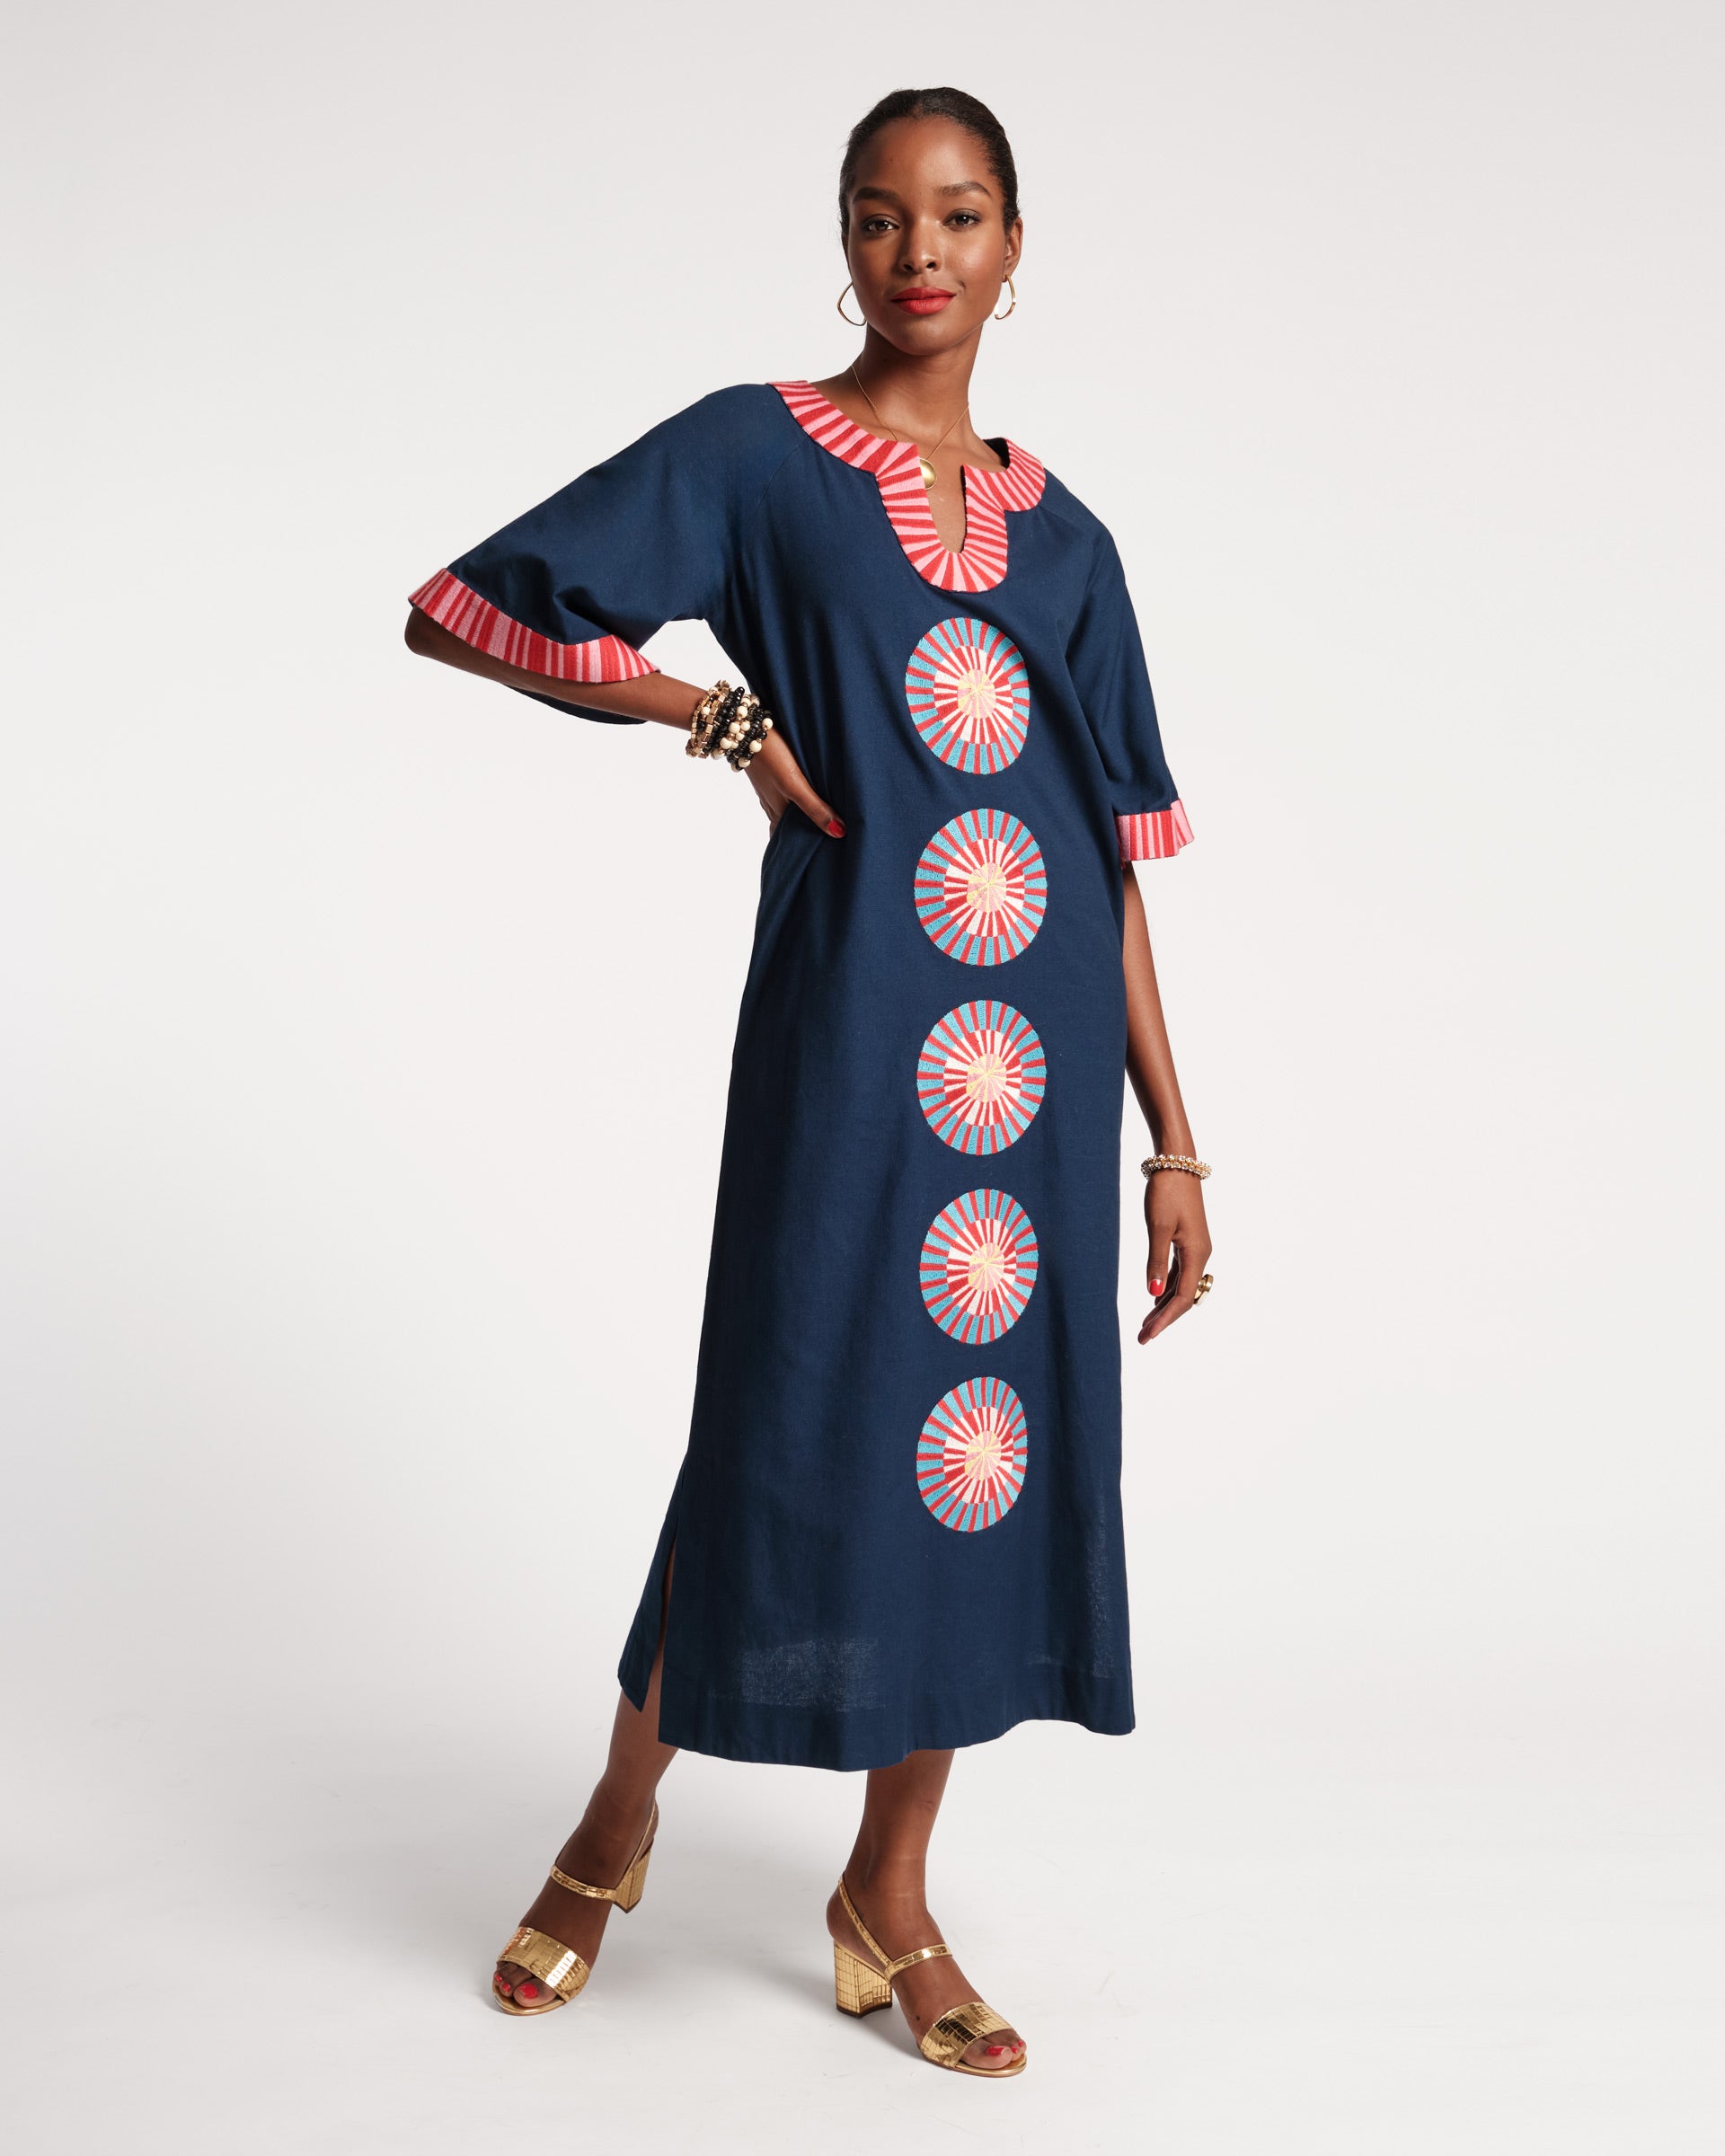 Stylish & Trendy Dresses & Caftans | Frances Valentine